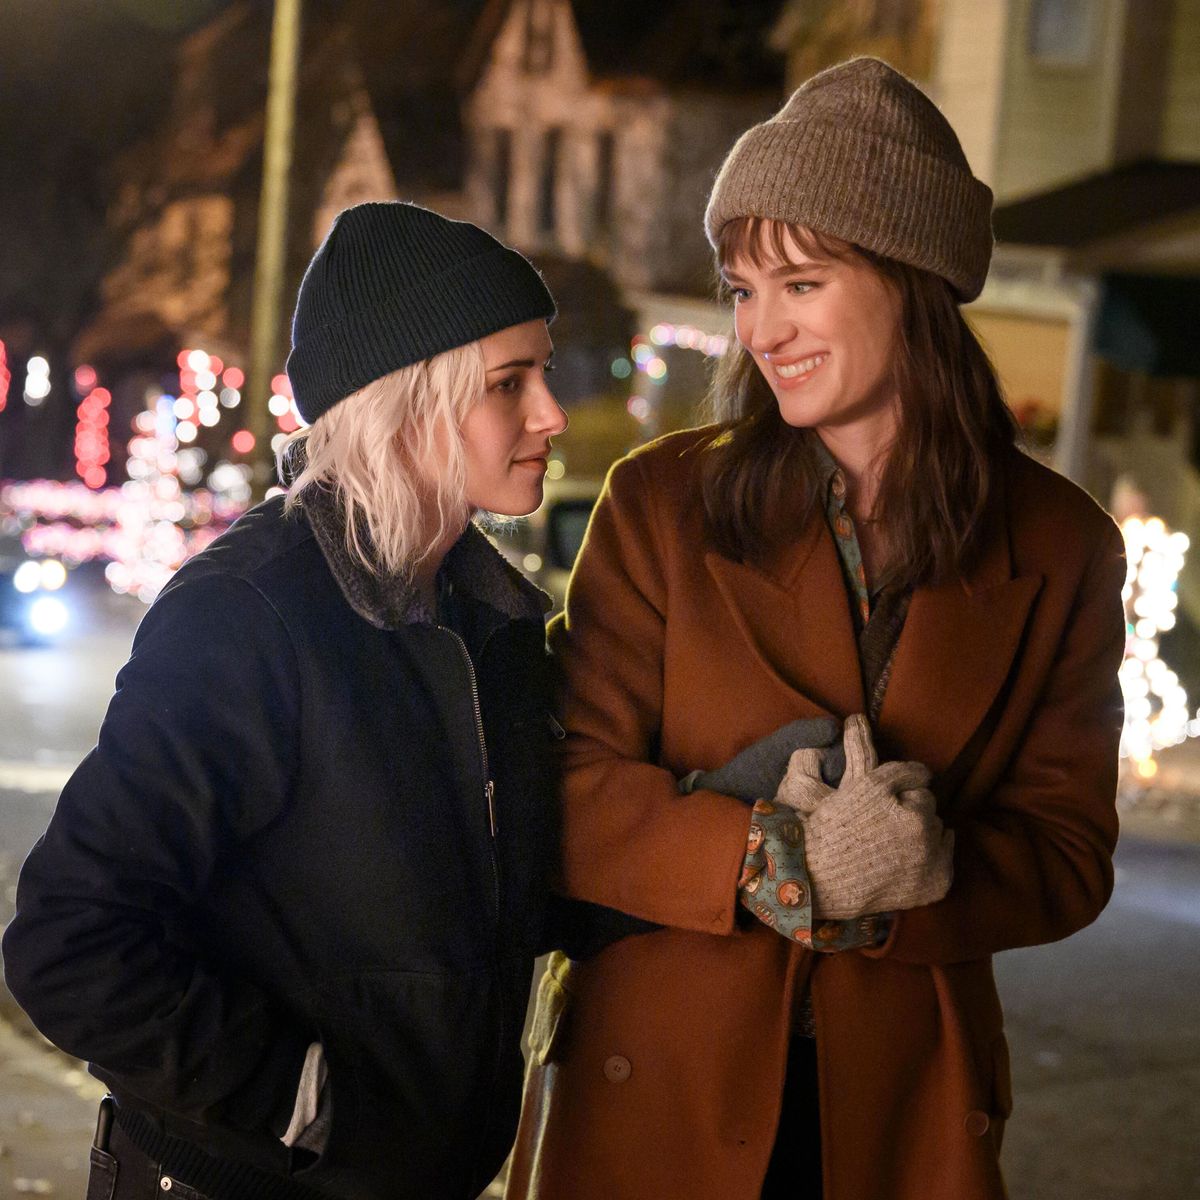 Movie Review: Happiest Season, Starring Kristen Stewart